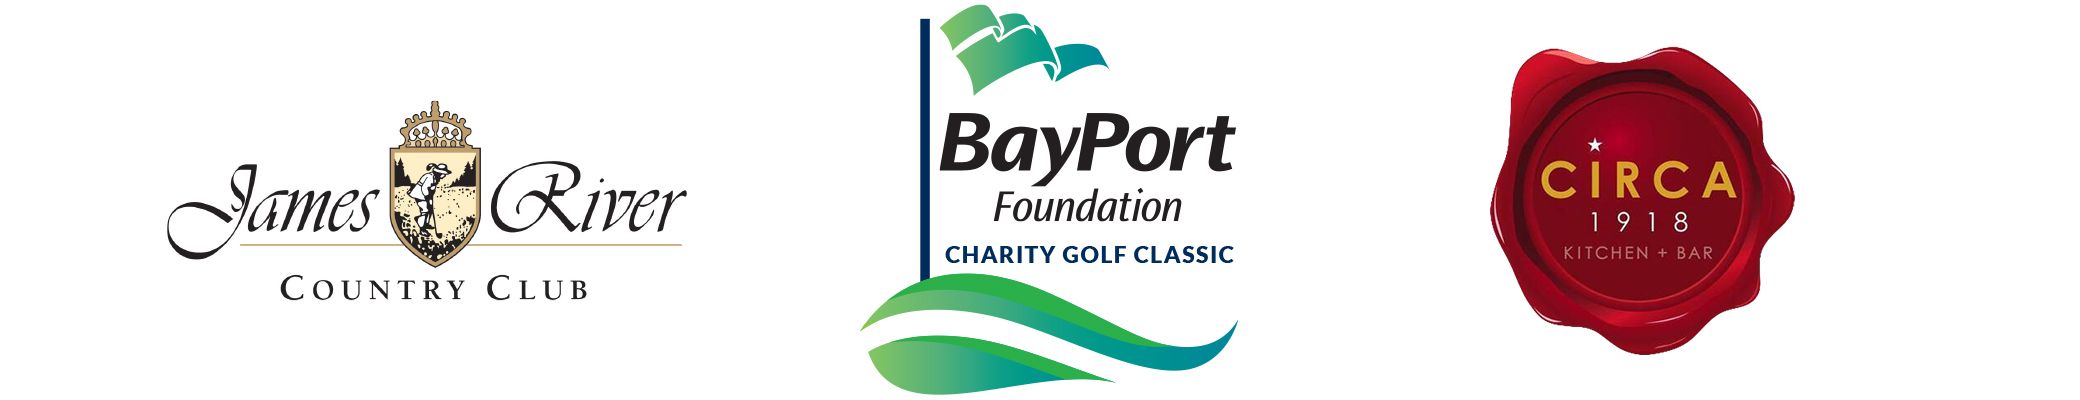 BayPort Foundation golf event logos